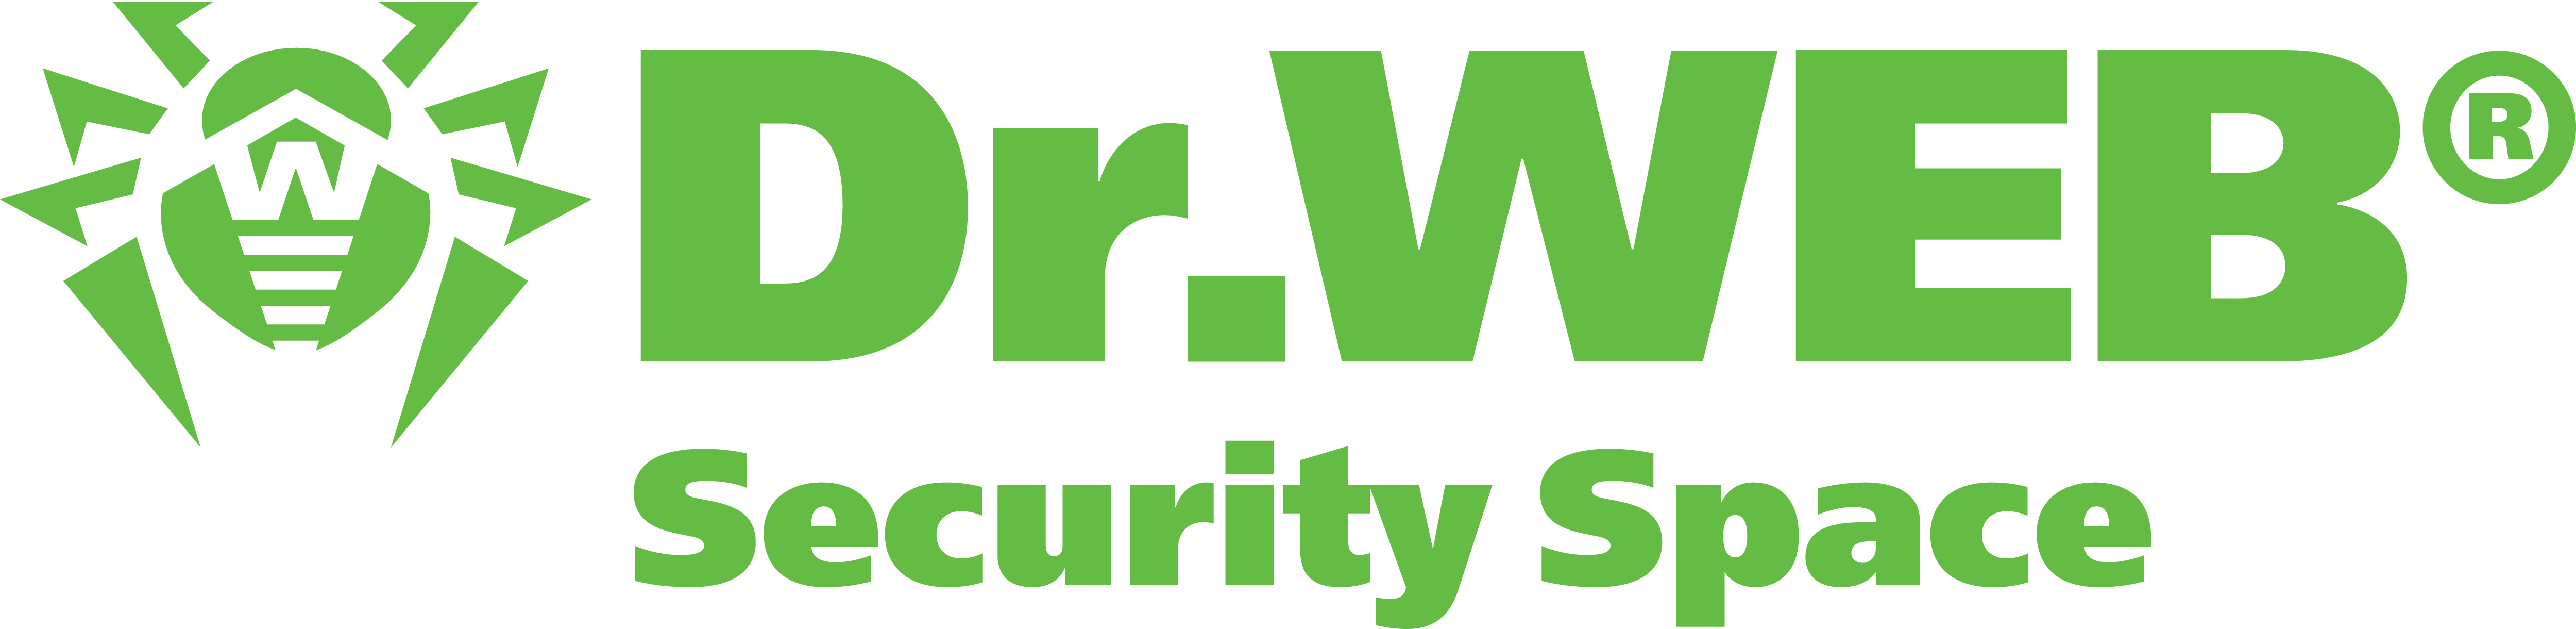 drweb_logo_security_space_green-5095391